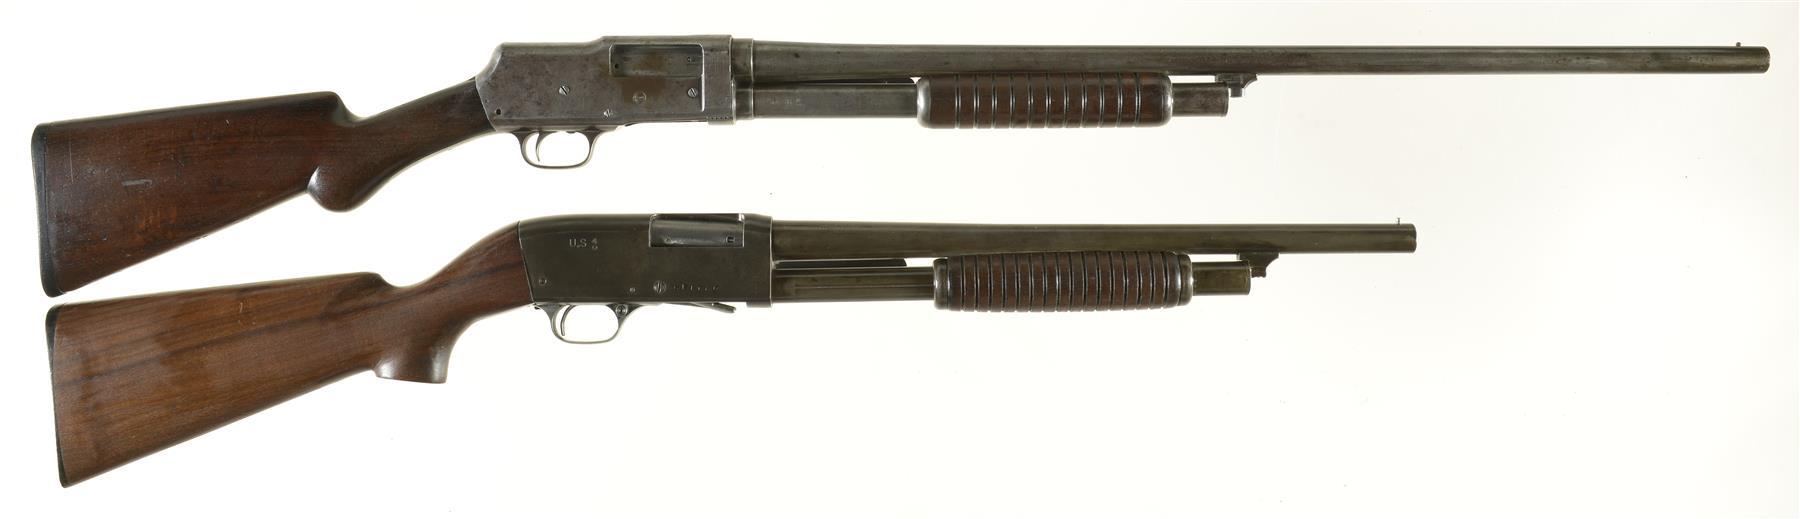 stevens 520 shotgun serial numbers